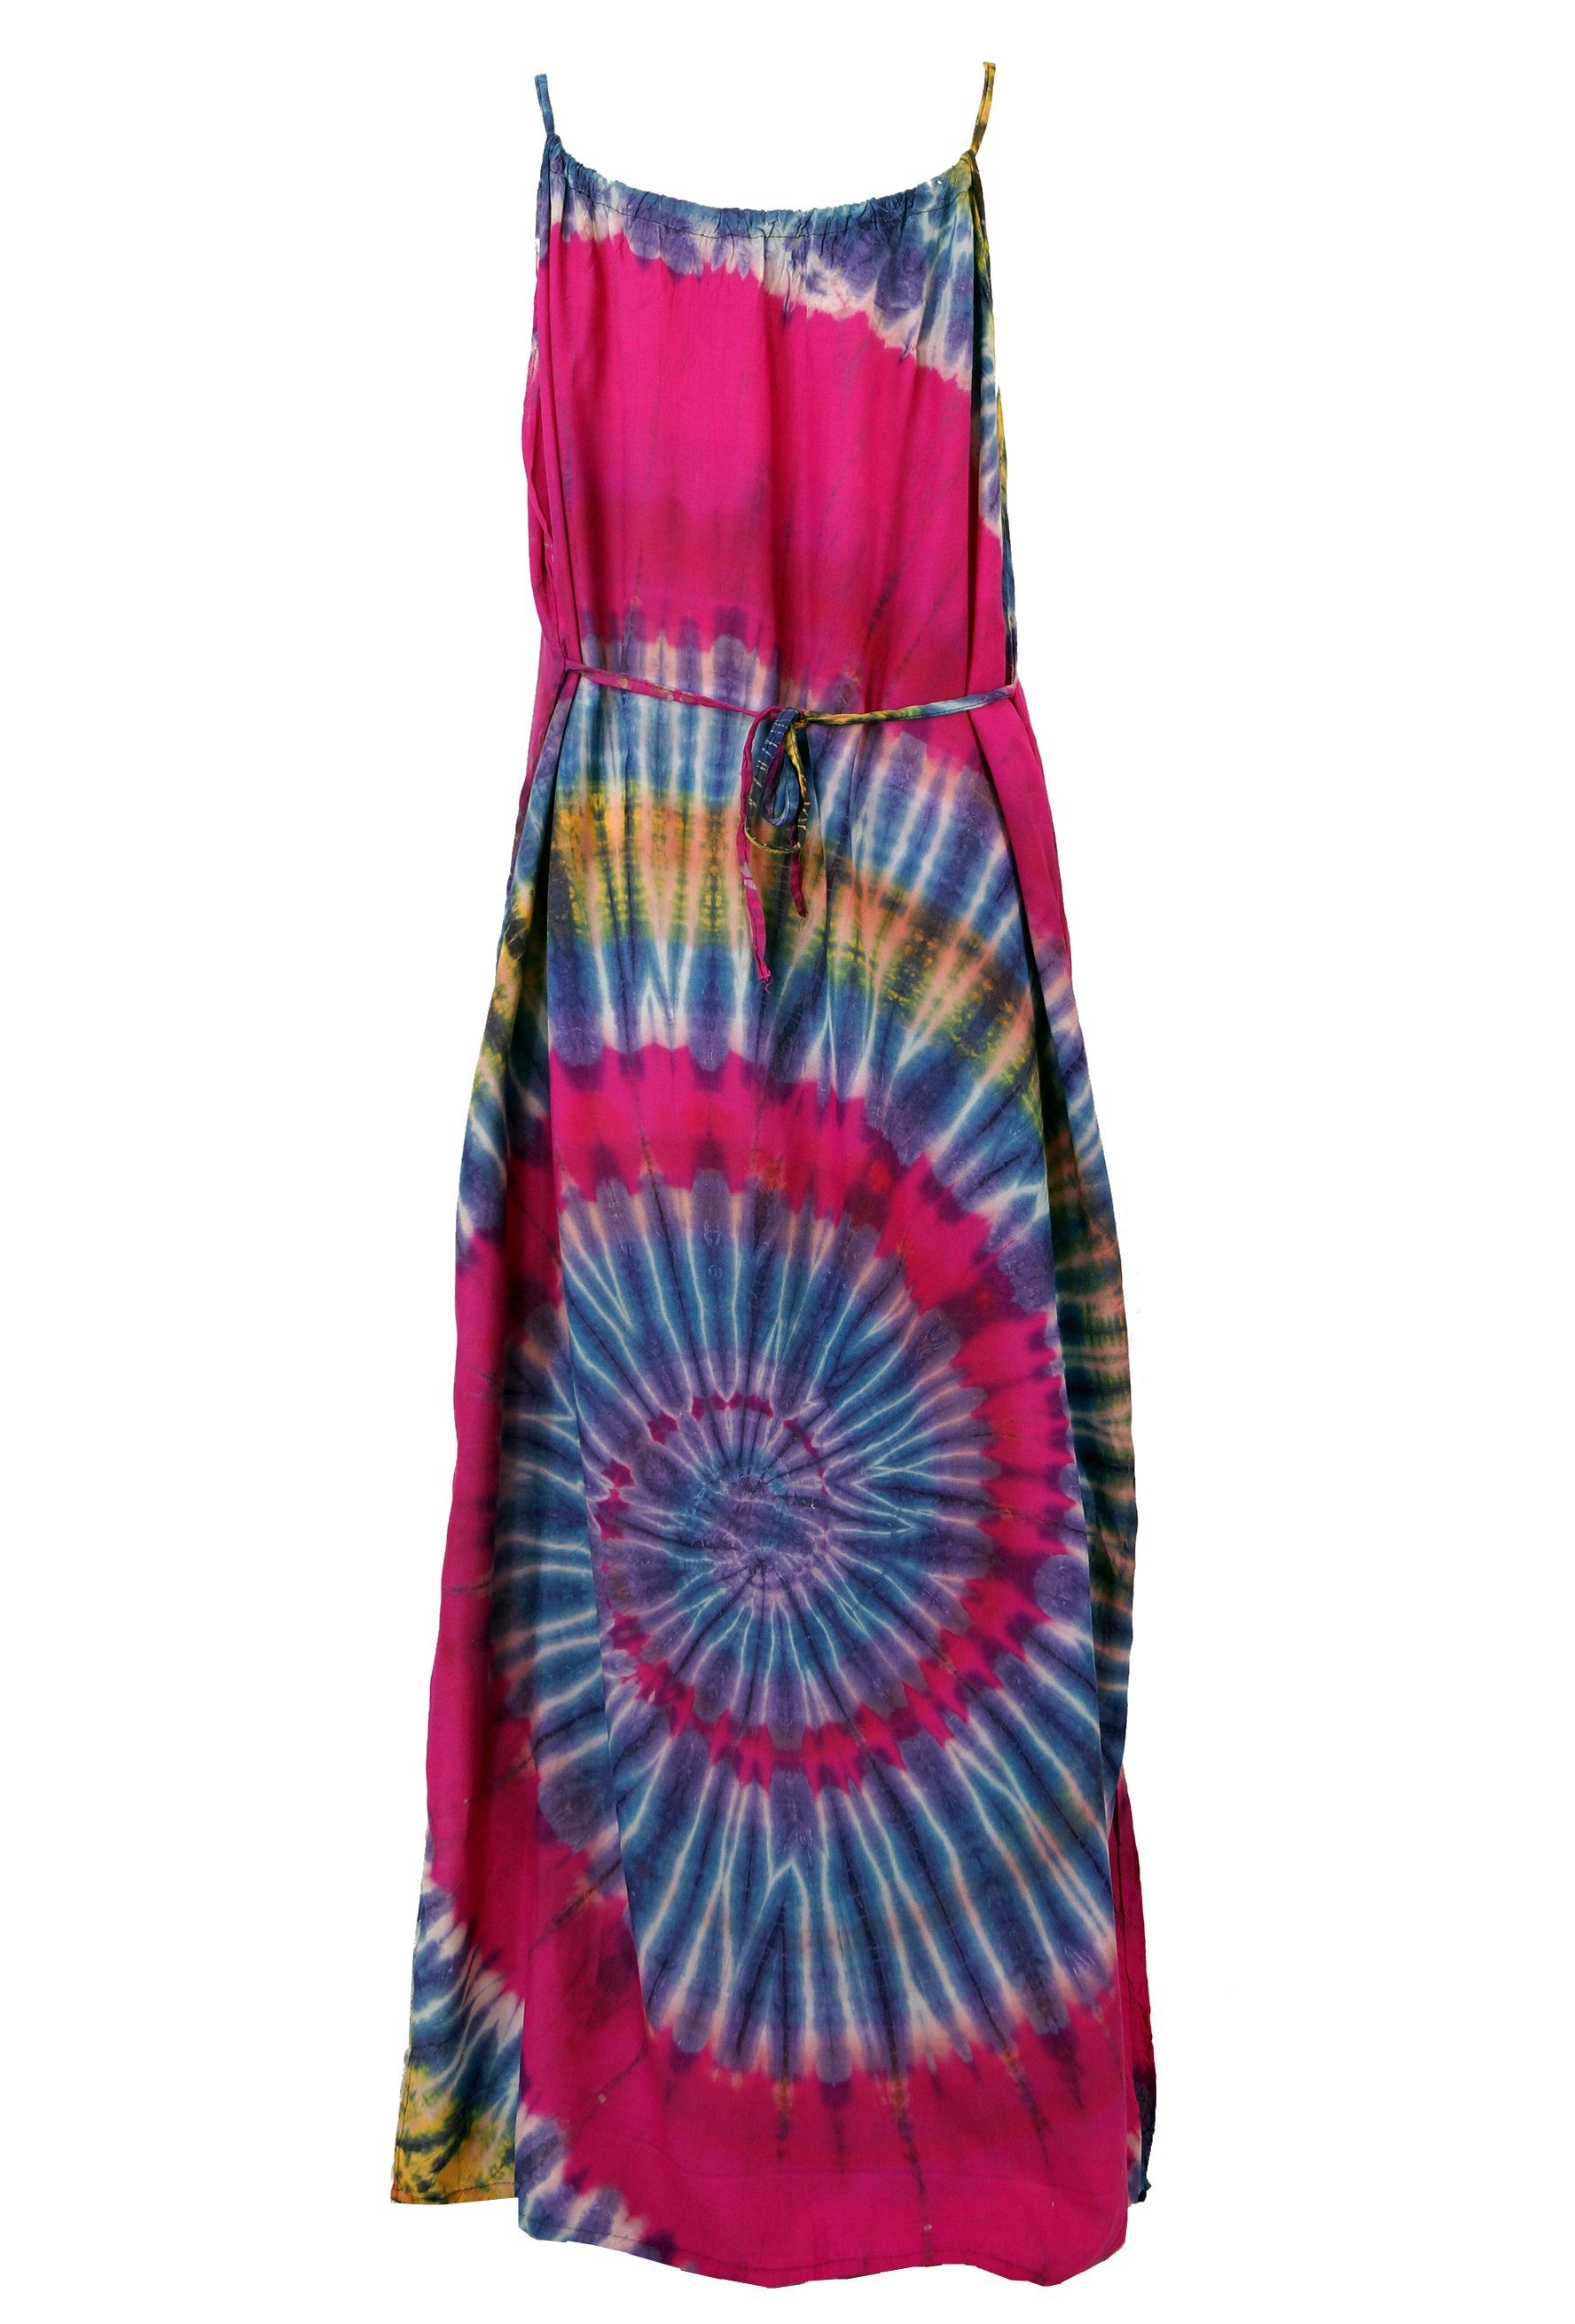 Guru-Shop Midikleid Batik Hippiekleid, Bekleidung Sommerkleid, Trägerkleid,.. alternative pink